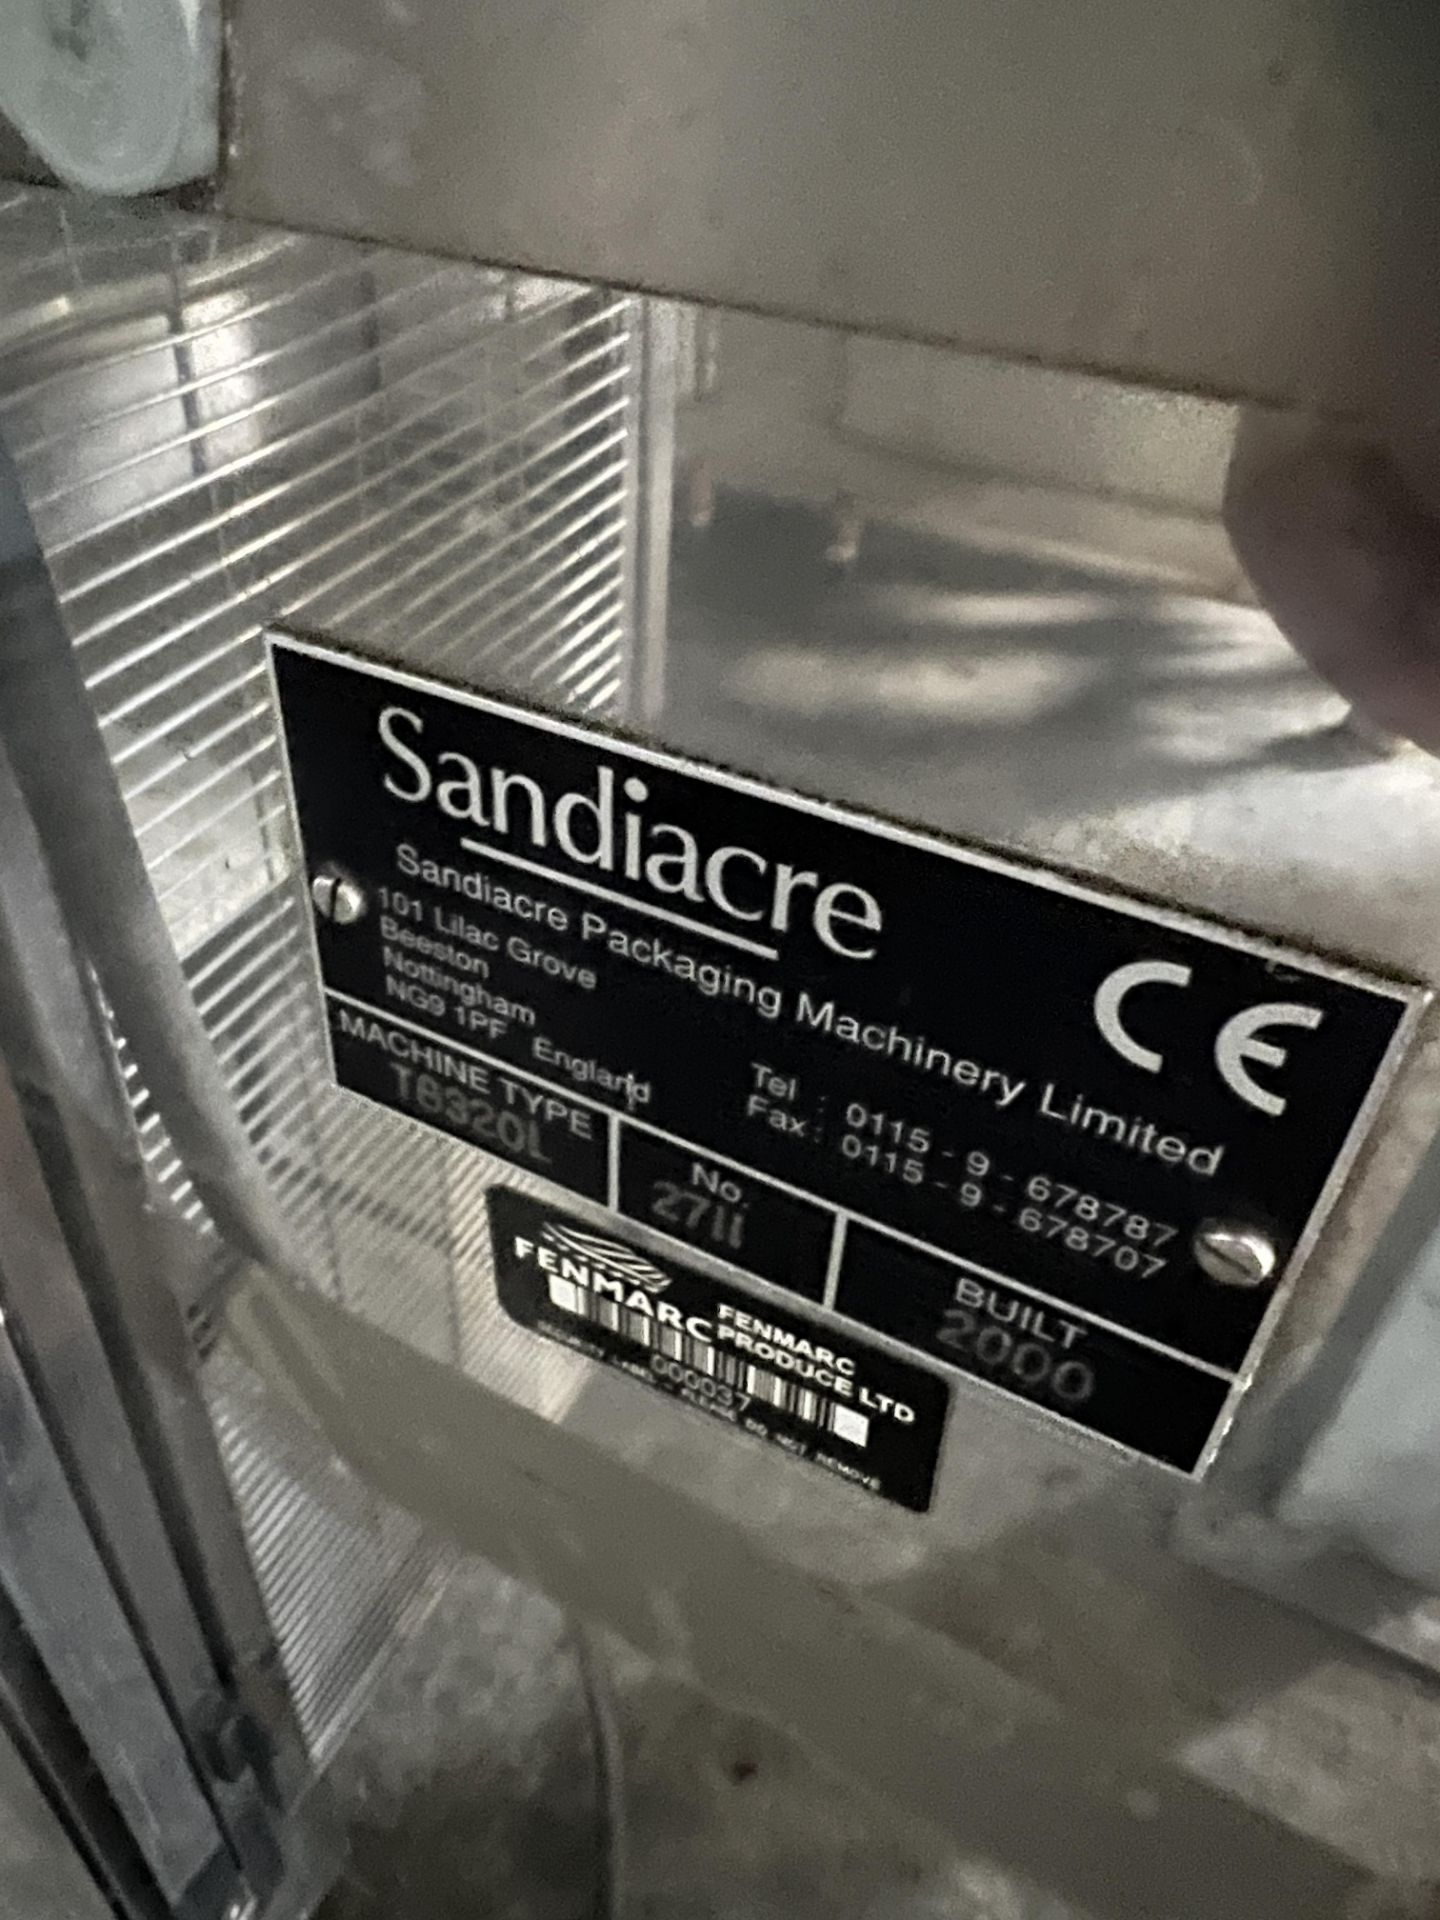 Sandiacre VFFS - Image 2 of 4